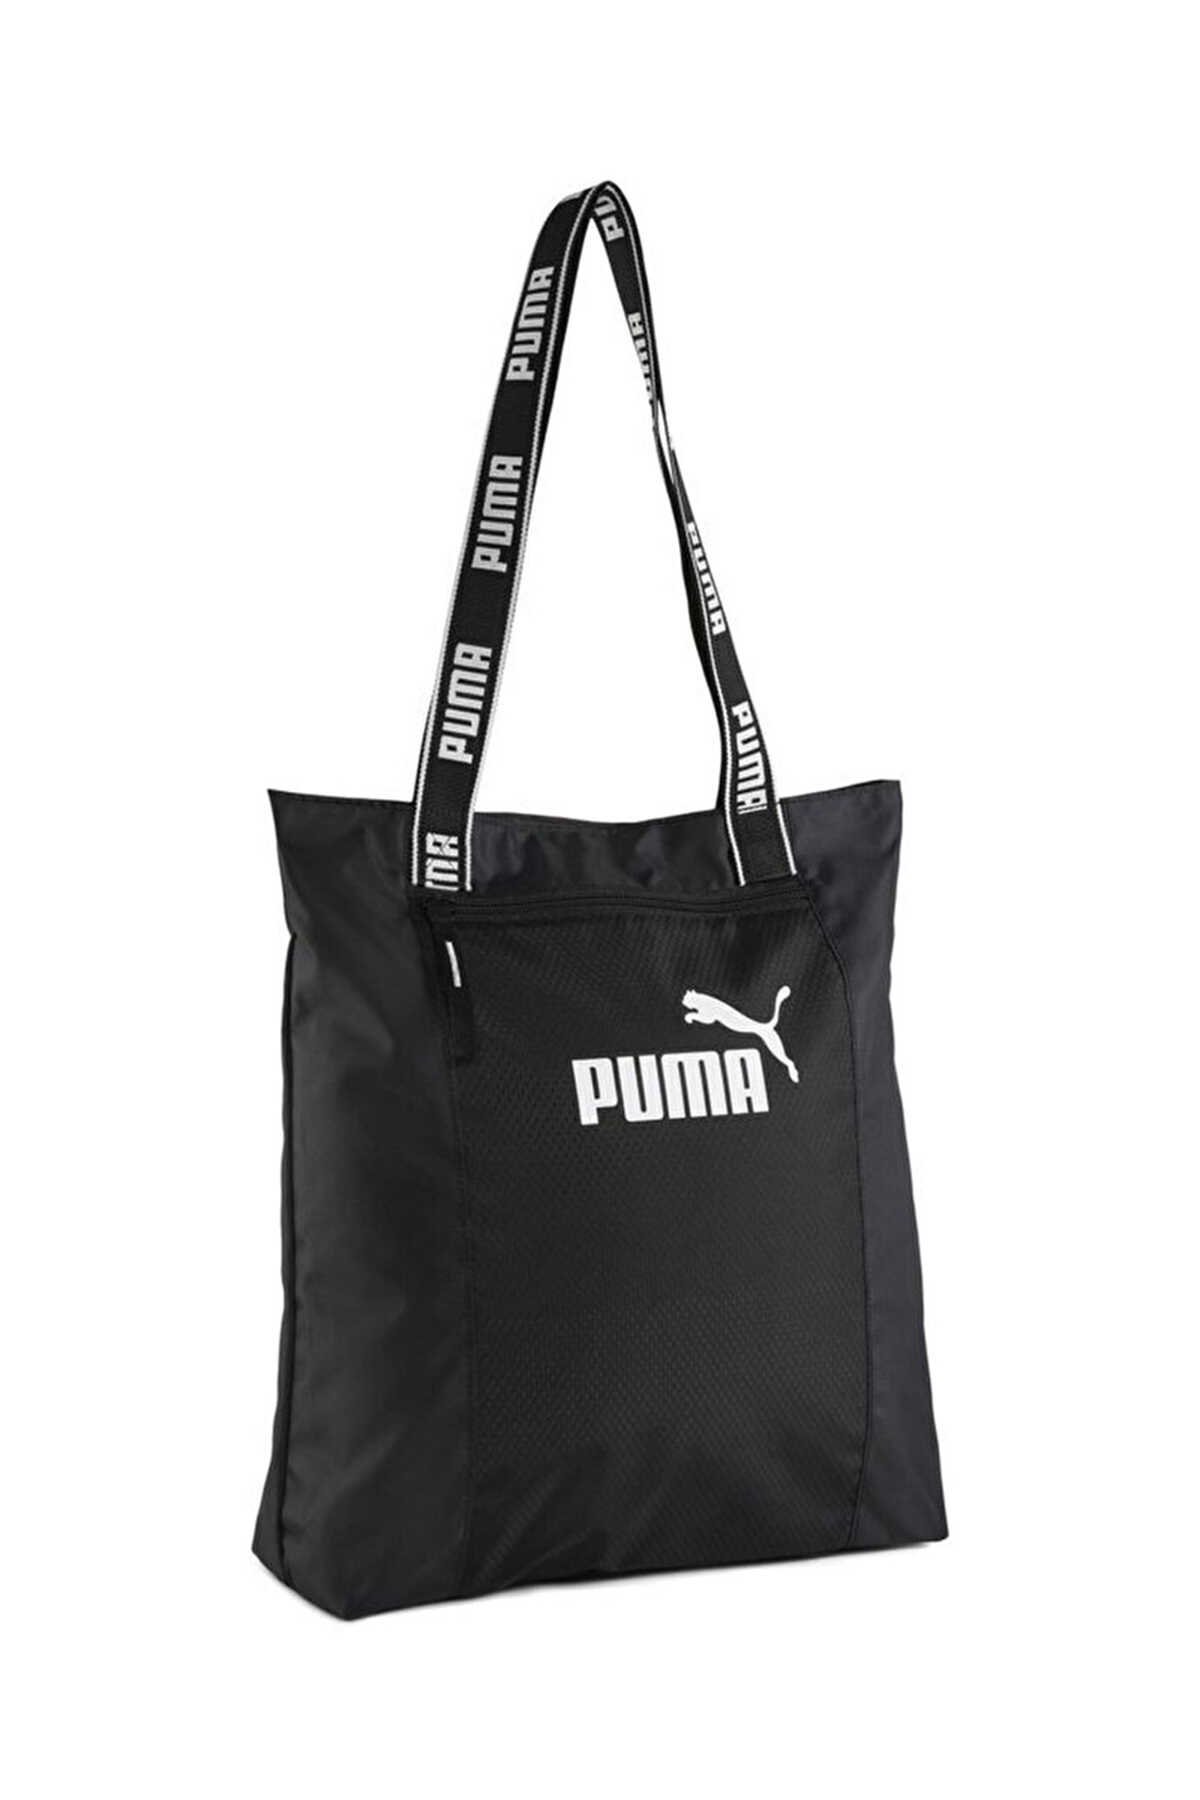 Puma - Puma Core Base Shopper Kadın Omuz Çantası Siyah